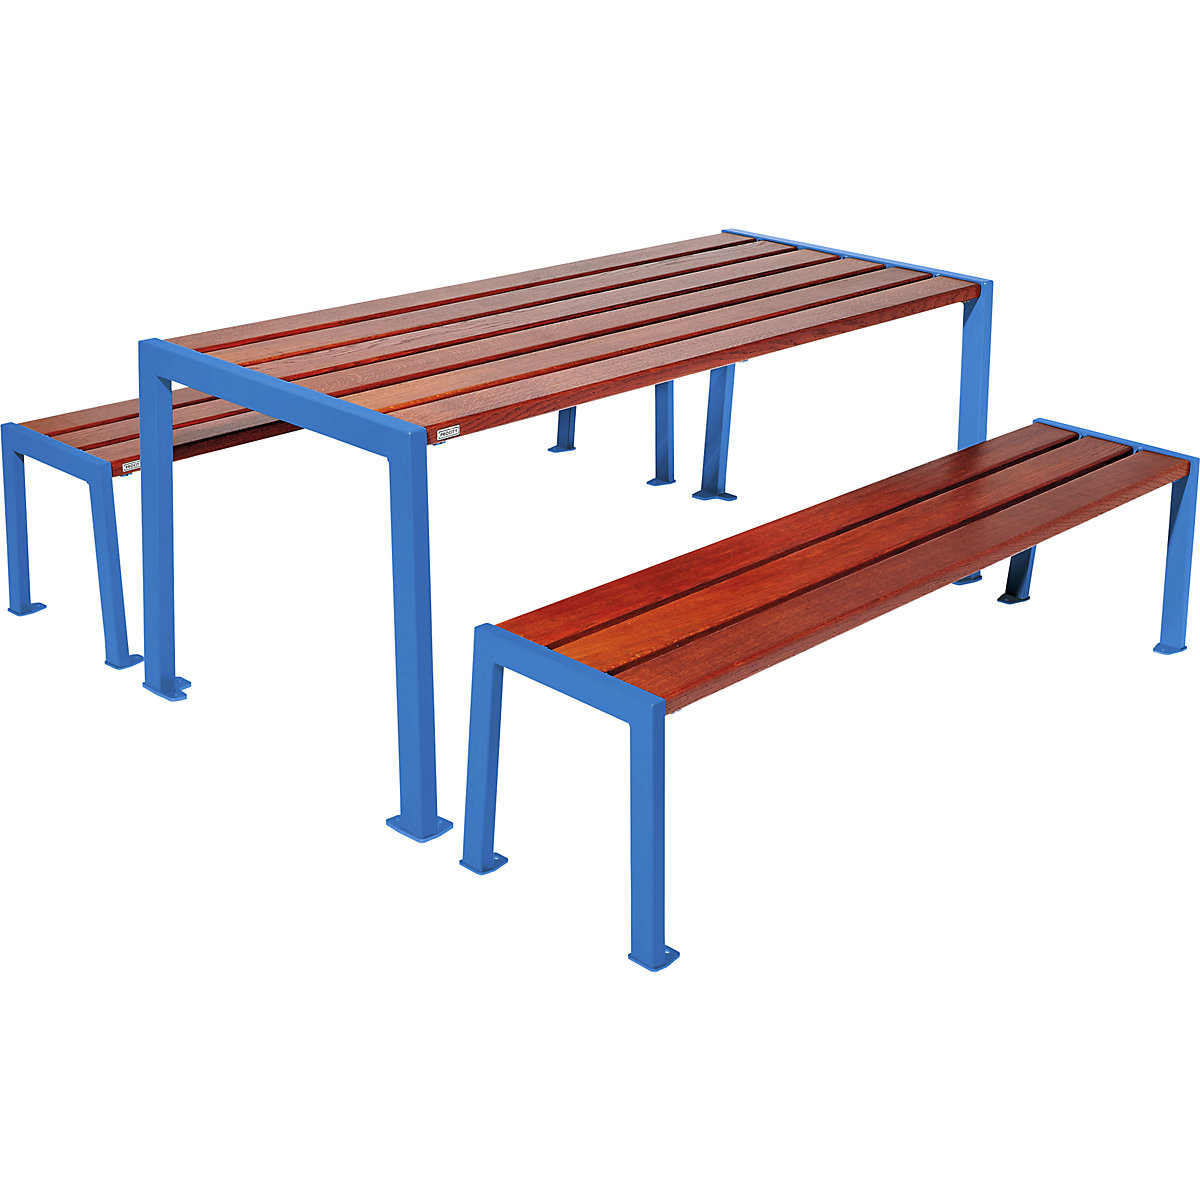 Garnitura mize in klopi Silaos® – PROCITY, dolžina 1800 mm, modre barve / mahagoni-6